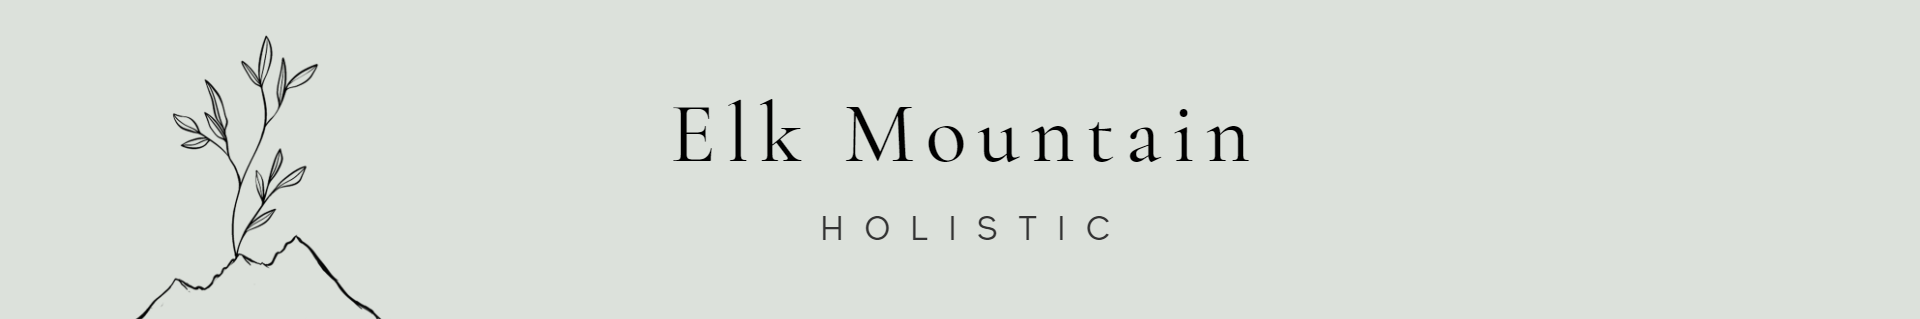 Elk Mountain Holistic's banner